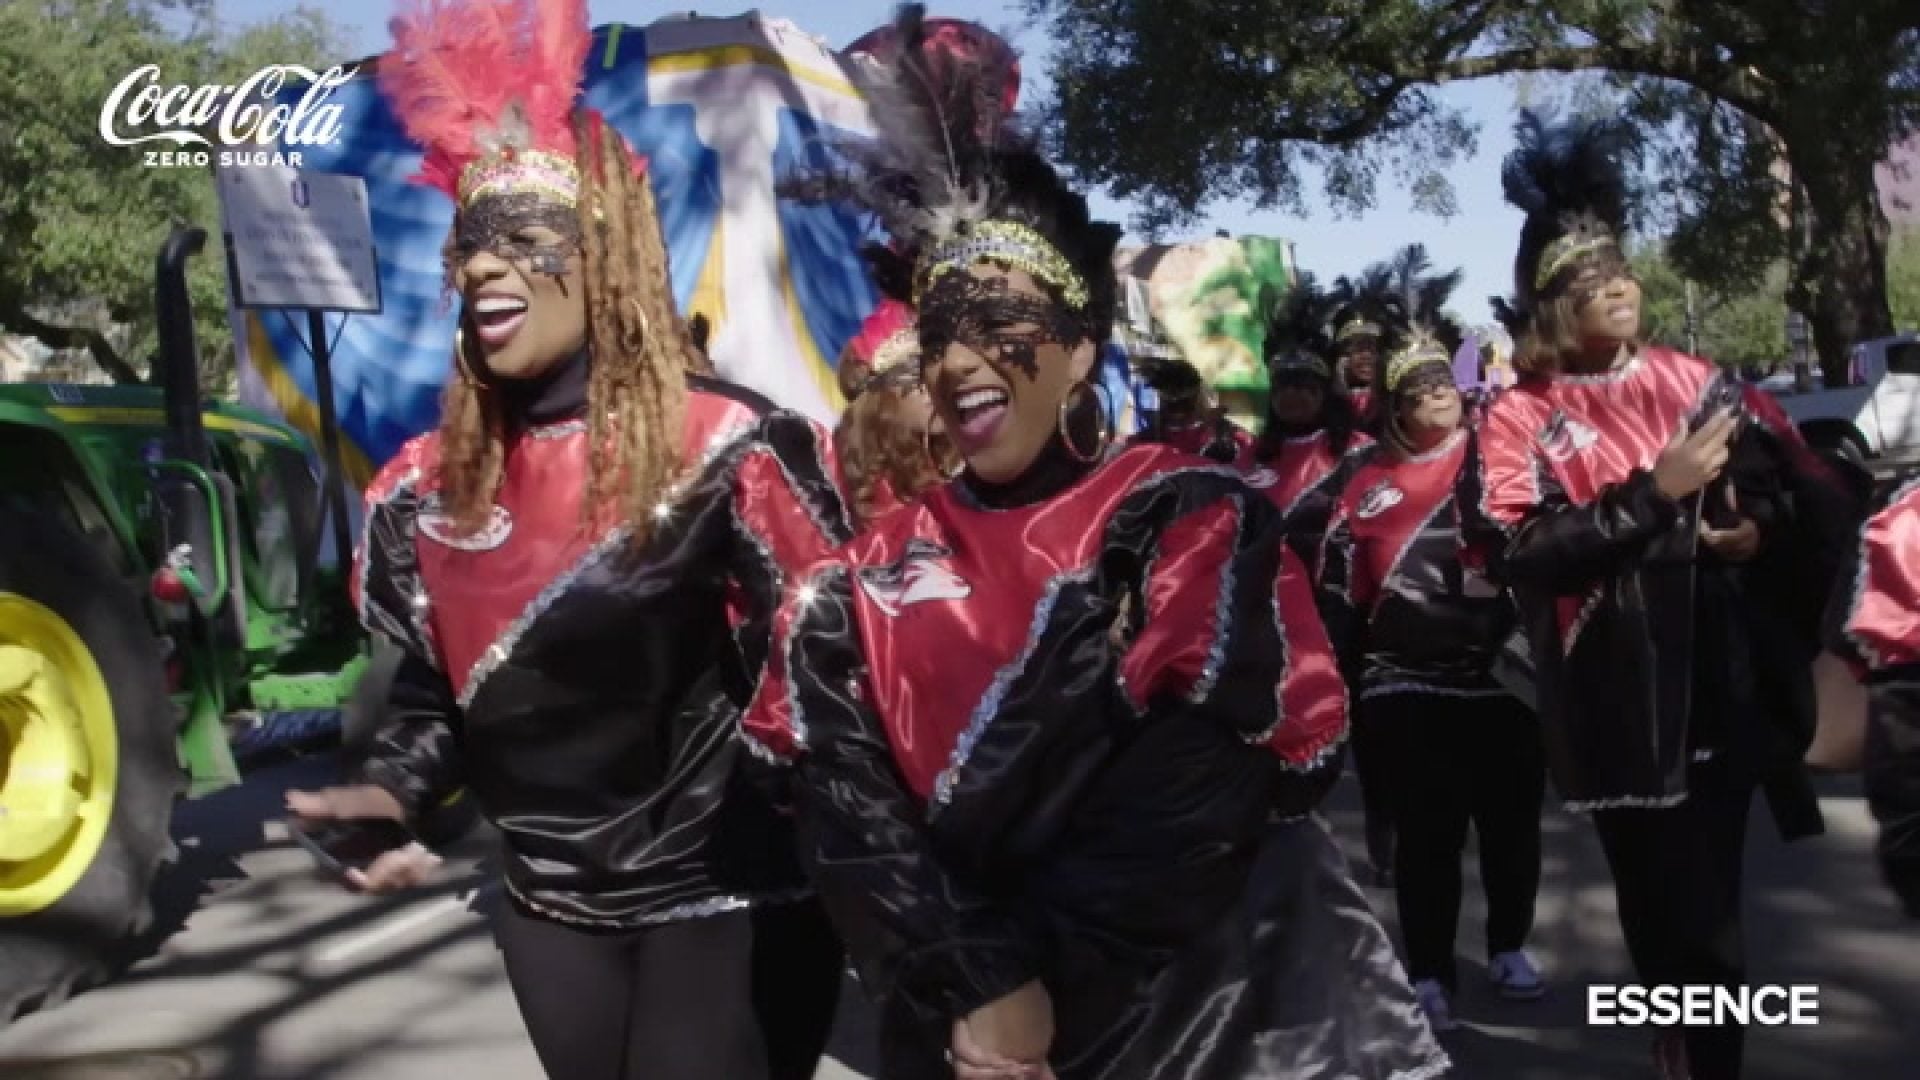 WATCH: ESSENCE Takes Mardi Gras Sponsored by Coca-Cola™ Zero Sugar